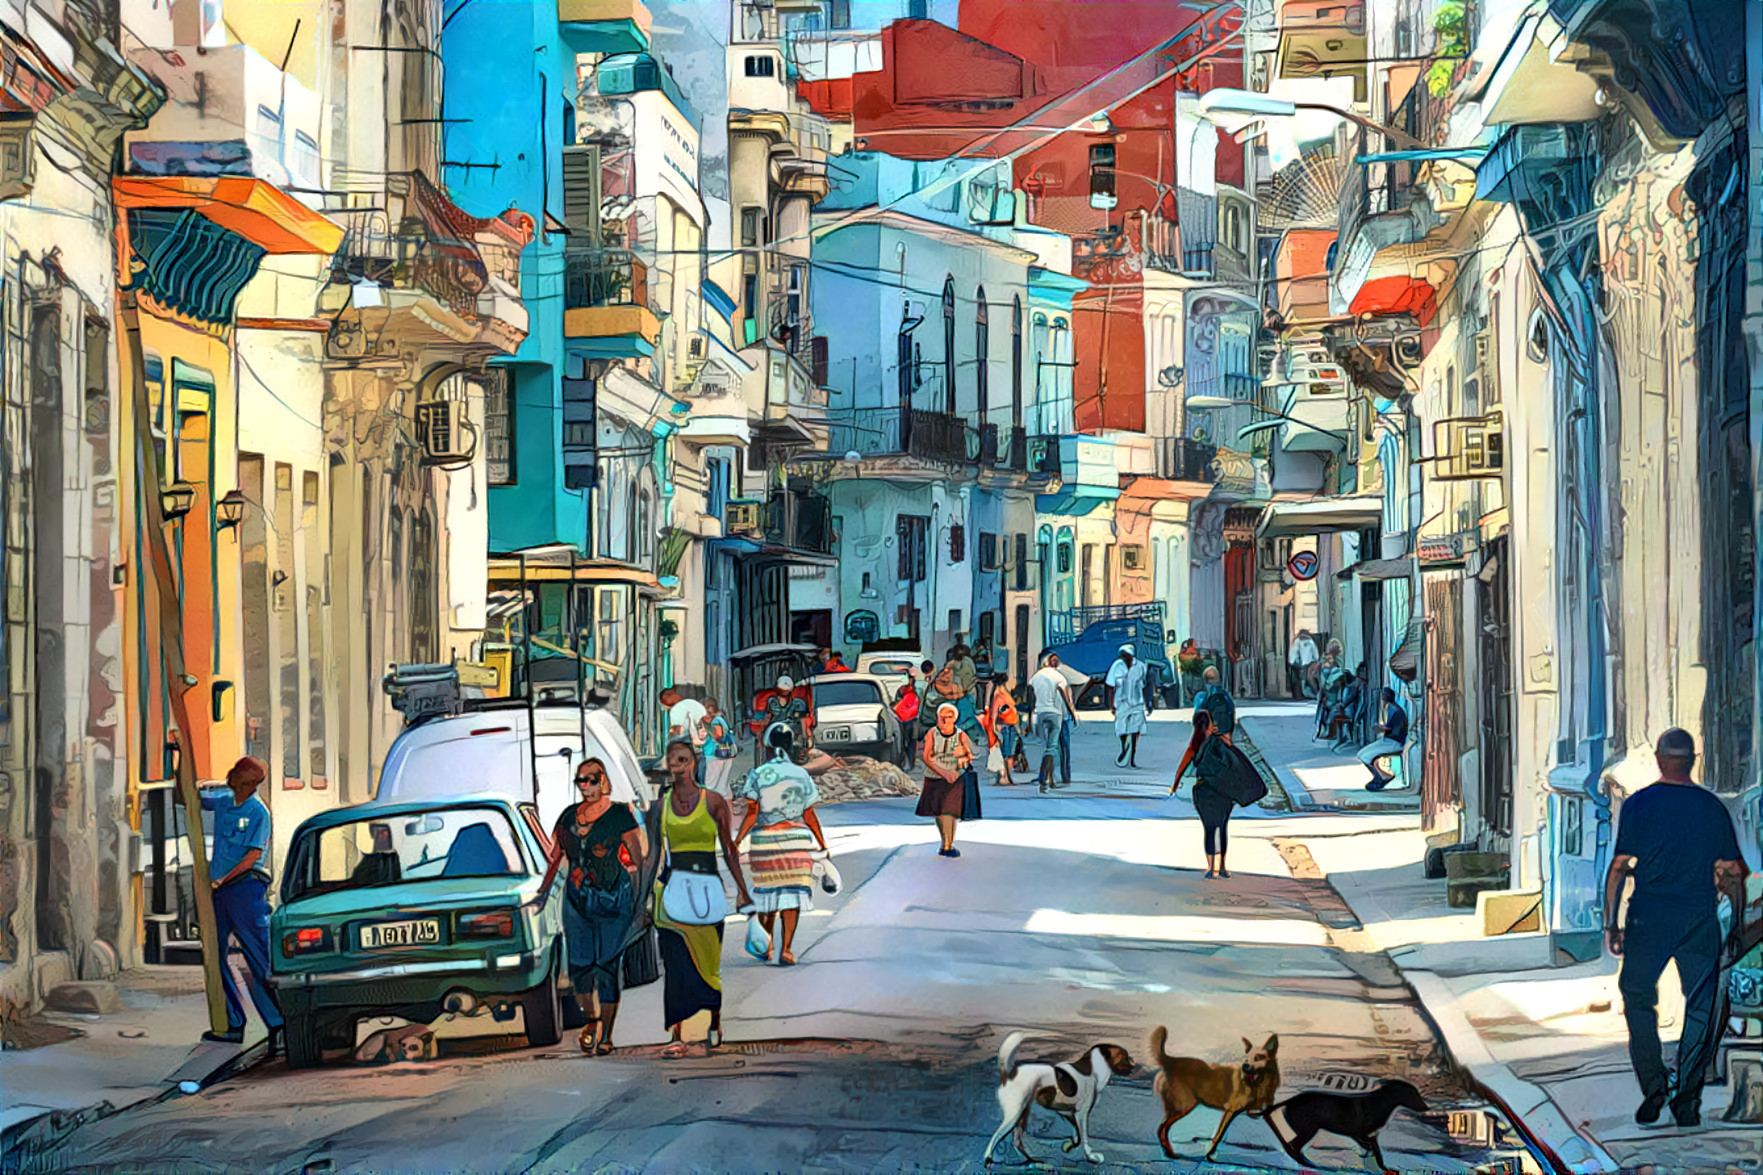 Street Scene, Havana, Cuba (V1). Source photograph by Dorothea Oldani on Unsplash.